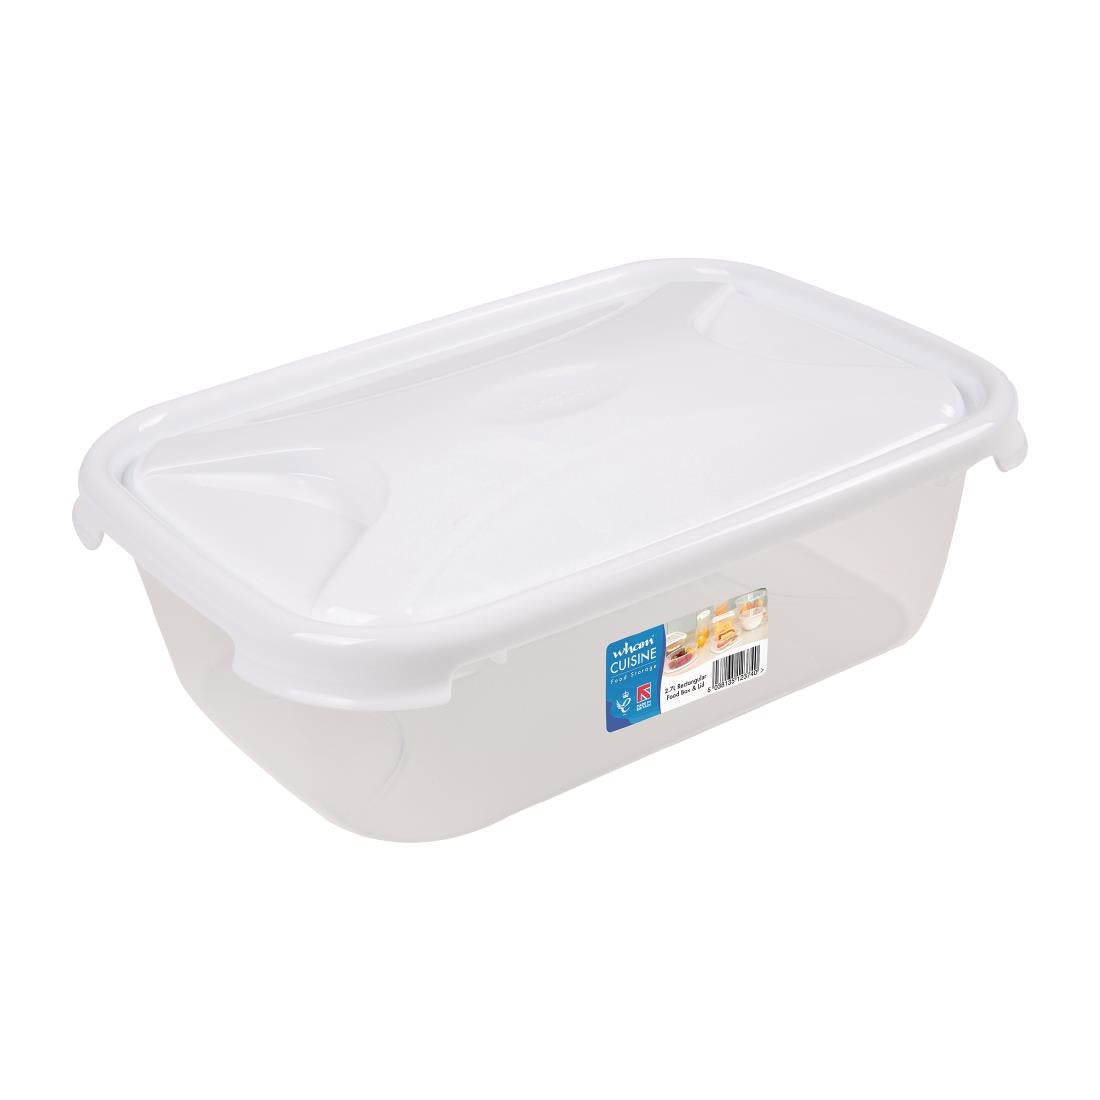 FS453 Wham Cuisine Polypropylene Rectangular Food Storage Box Container 2.7ltr JD Catering Equipment Solutions Ltd